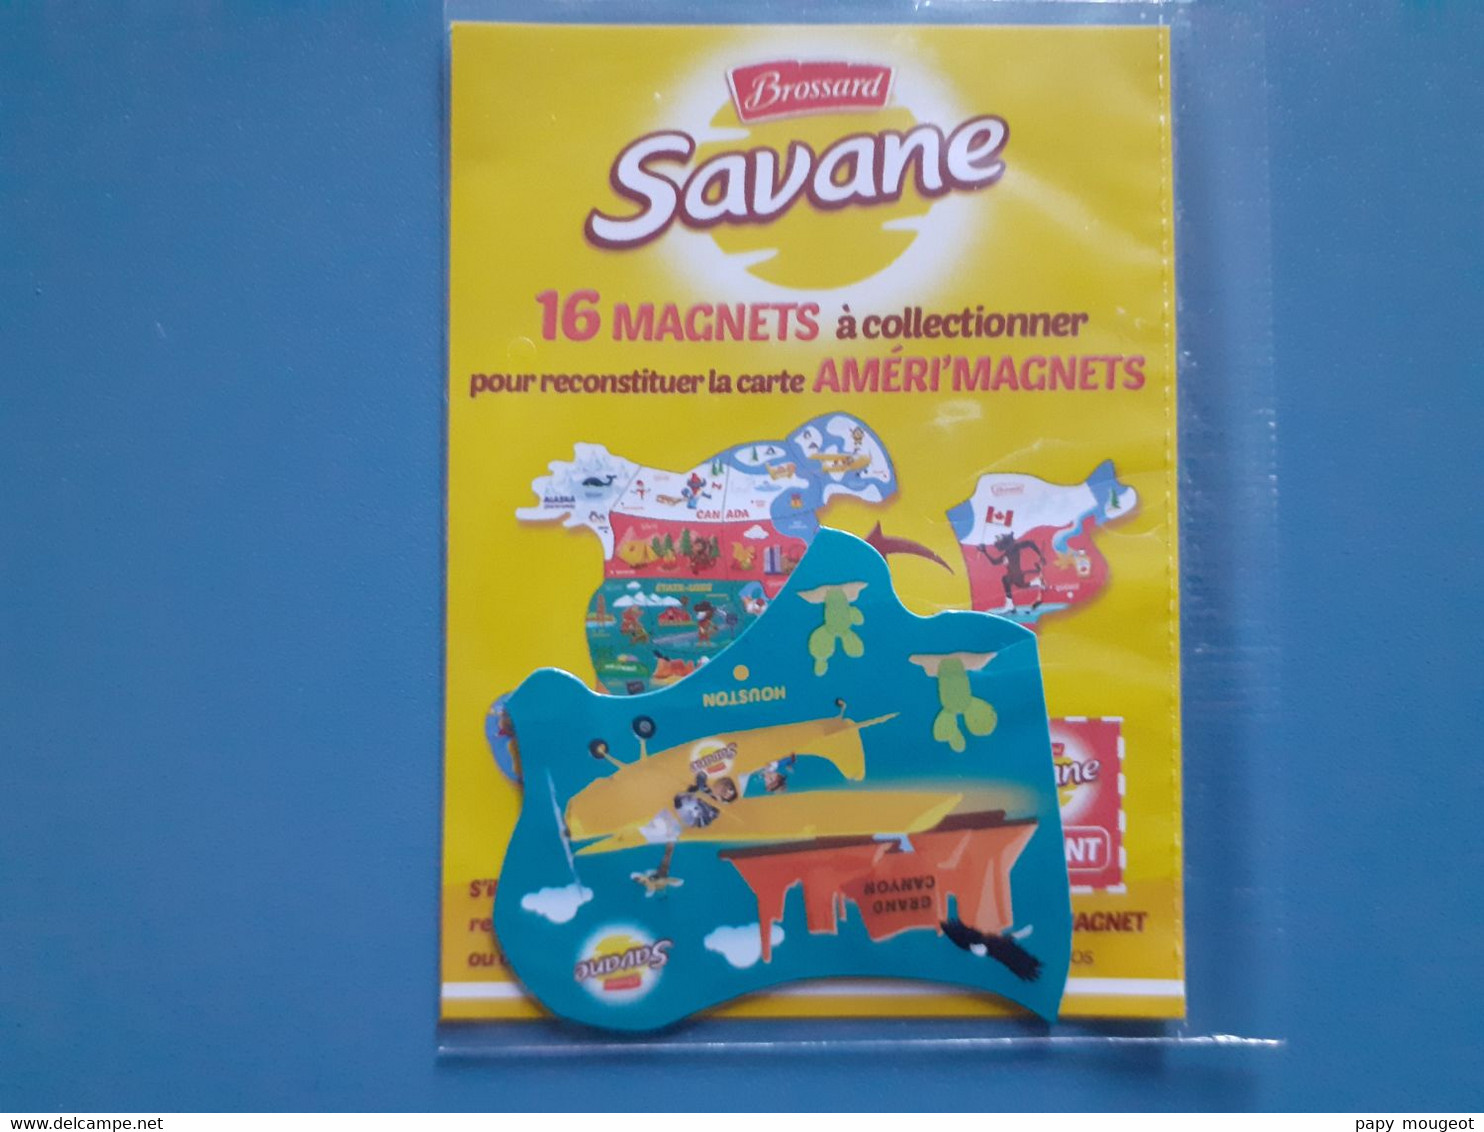 Brossard Savane - 16 Magnets Carte AMERI'MAGNETS - USA - Grand Canyon Houston - Advertising